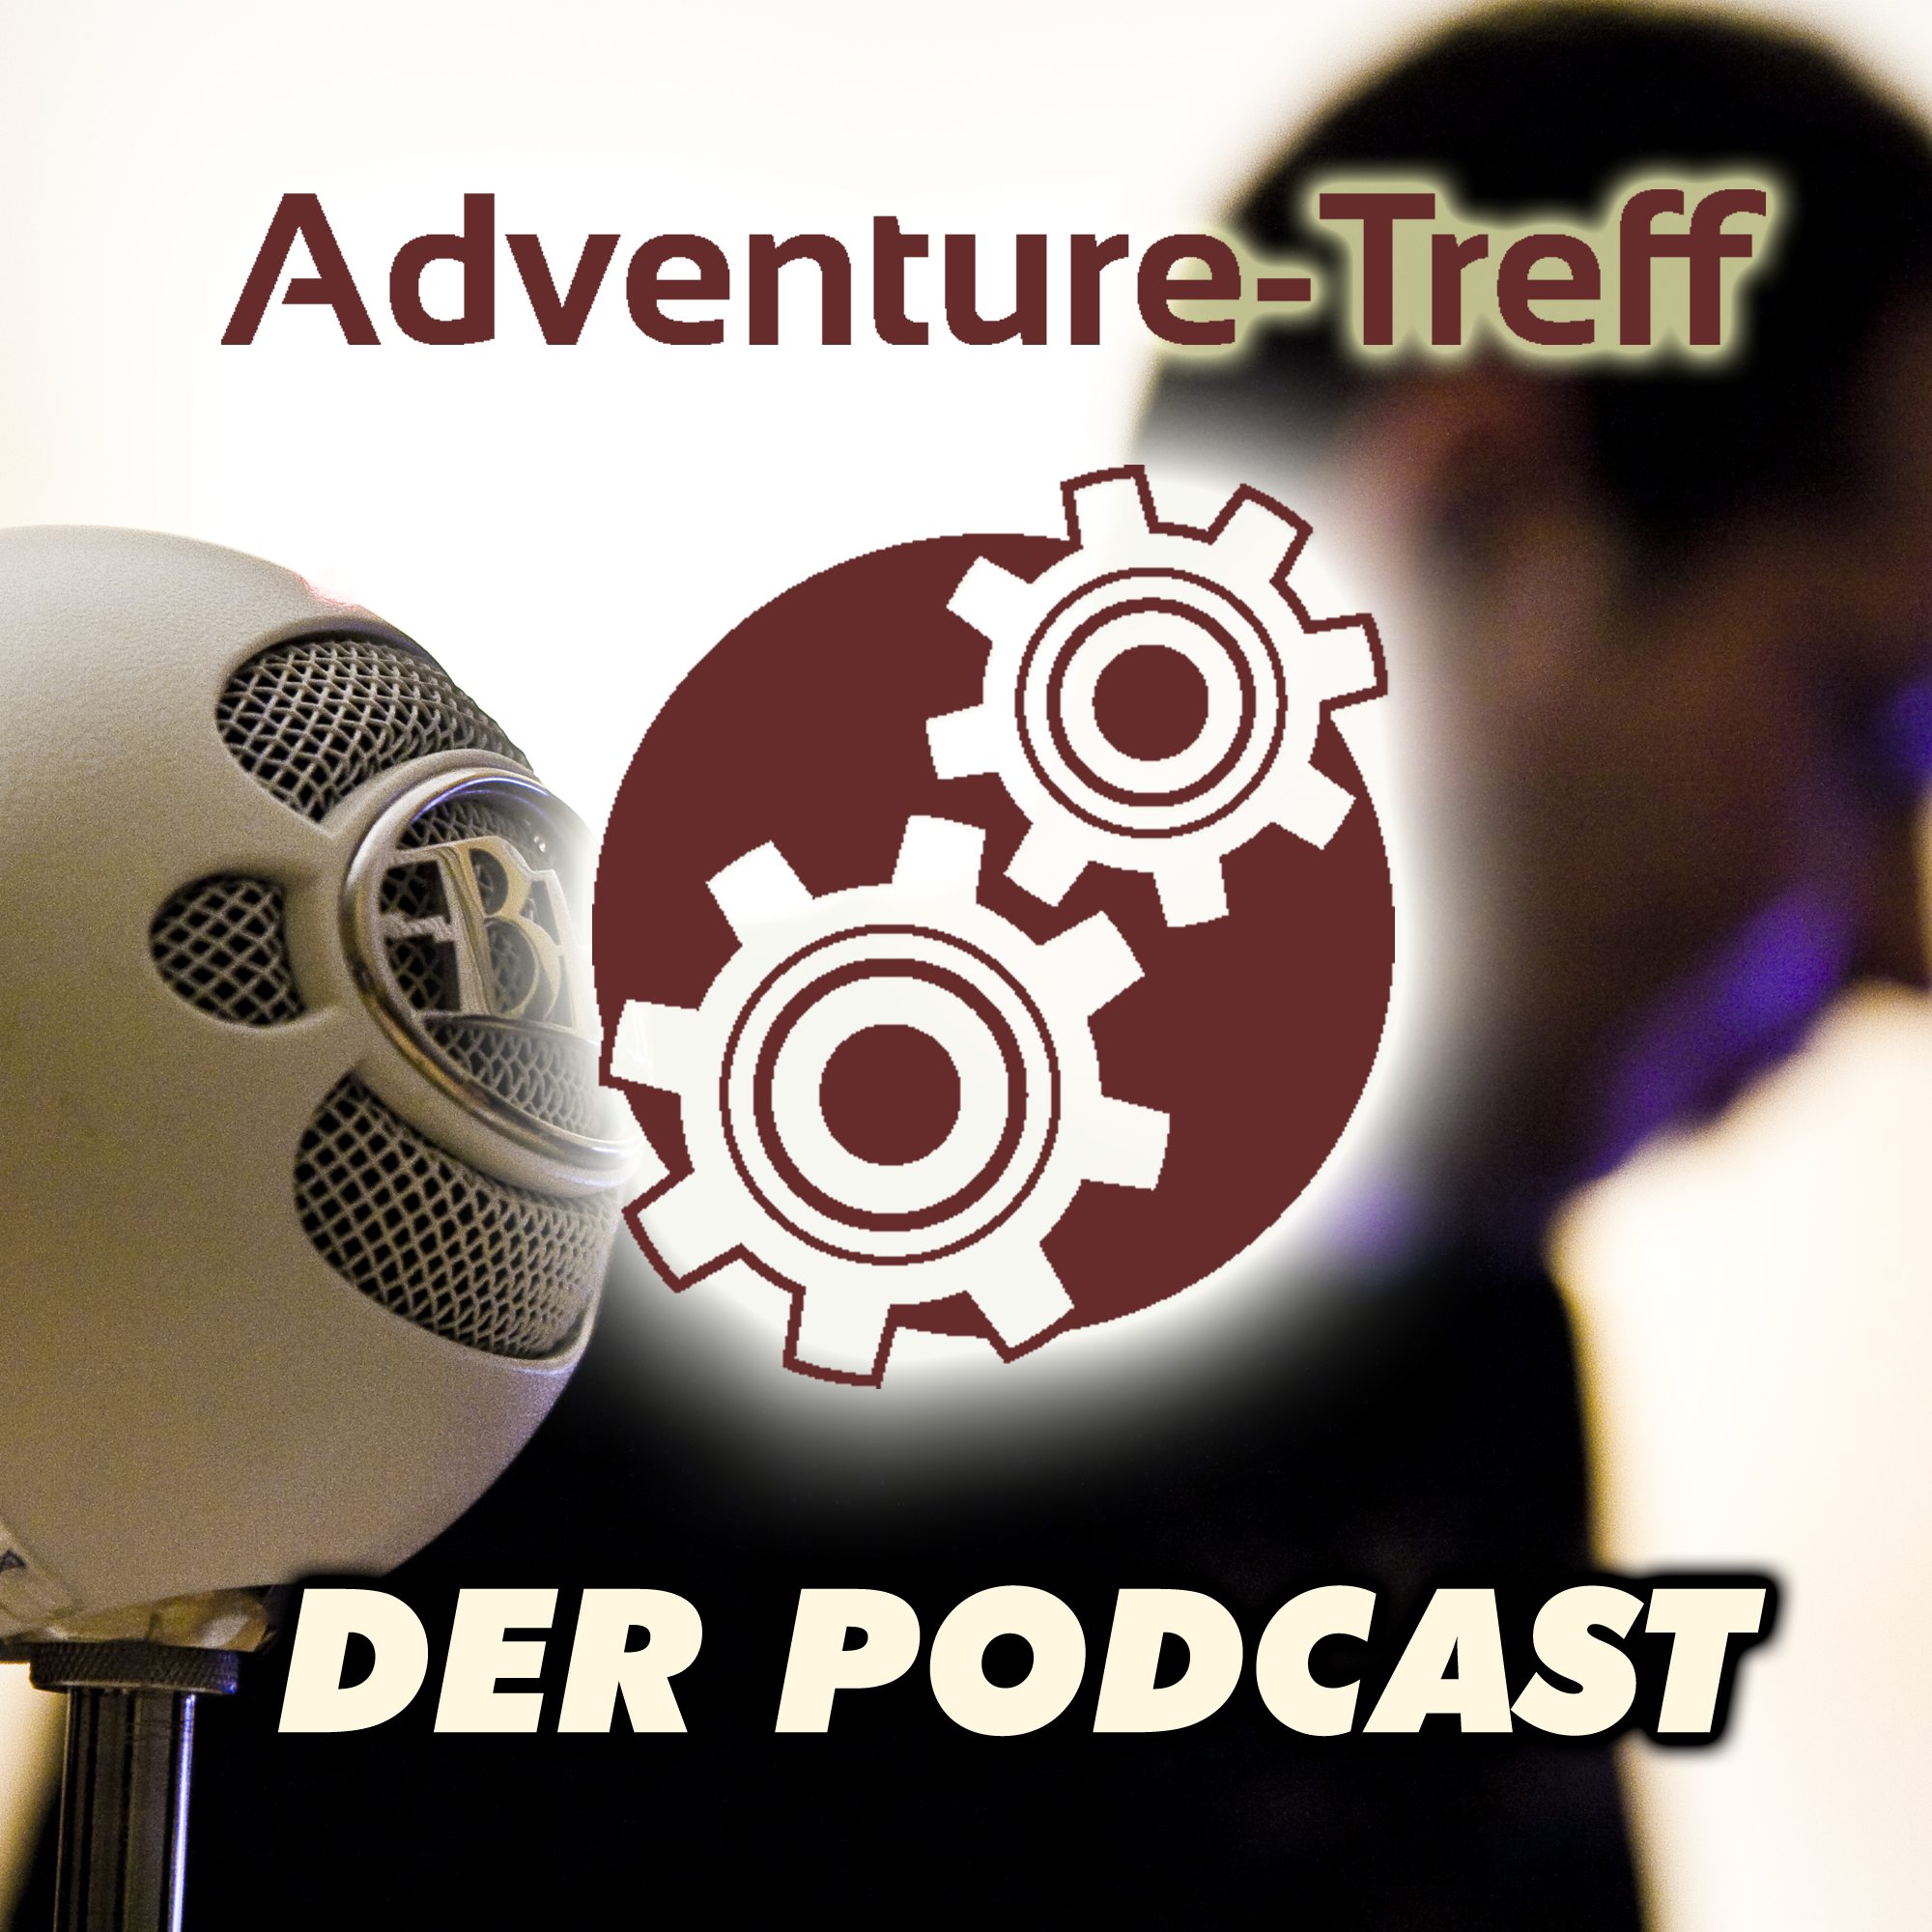 Adventure-Treff Podcast